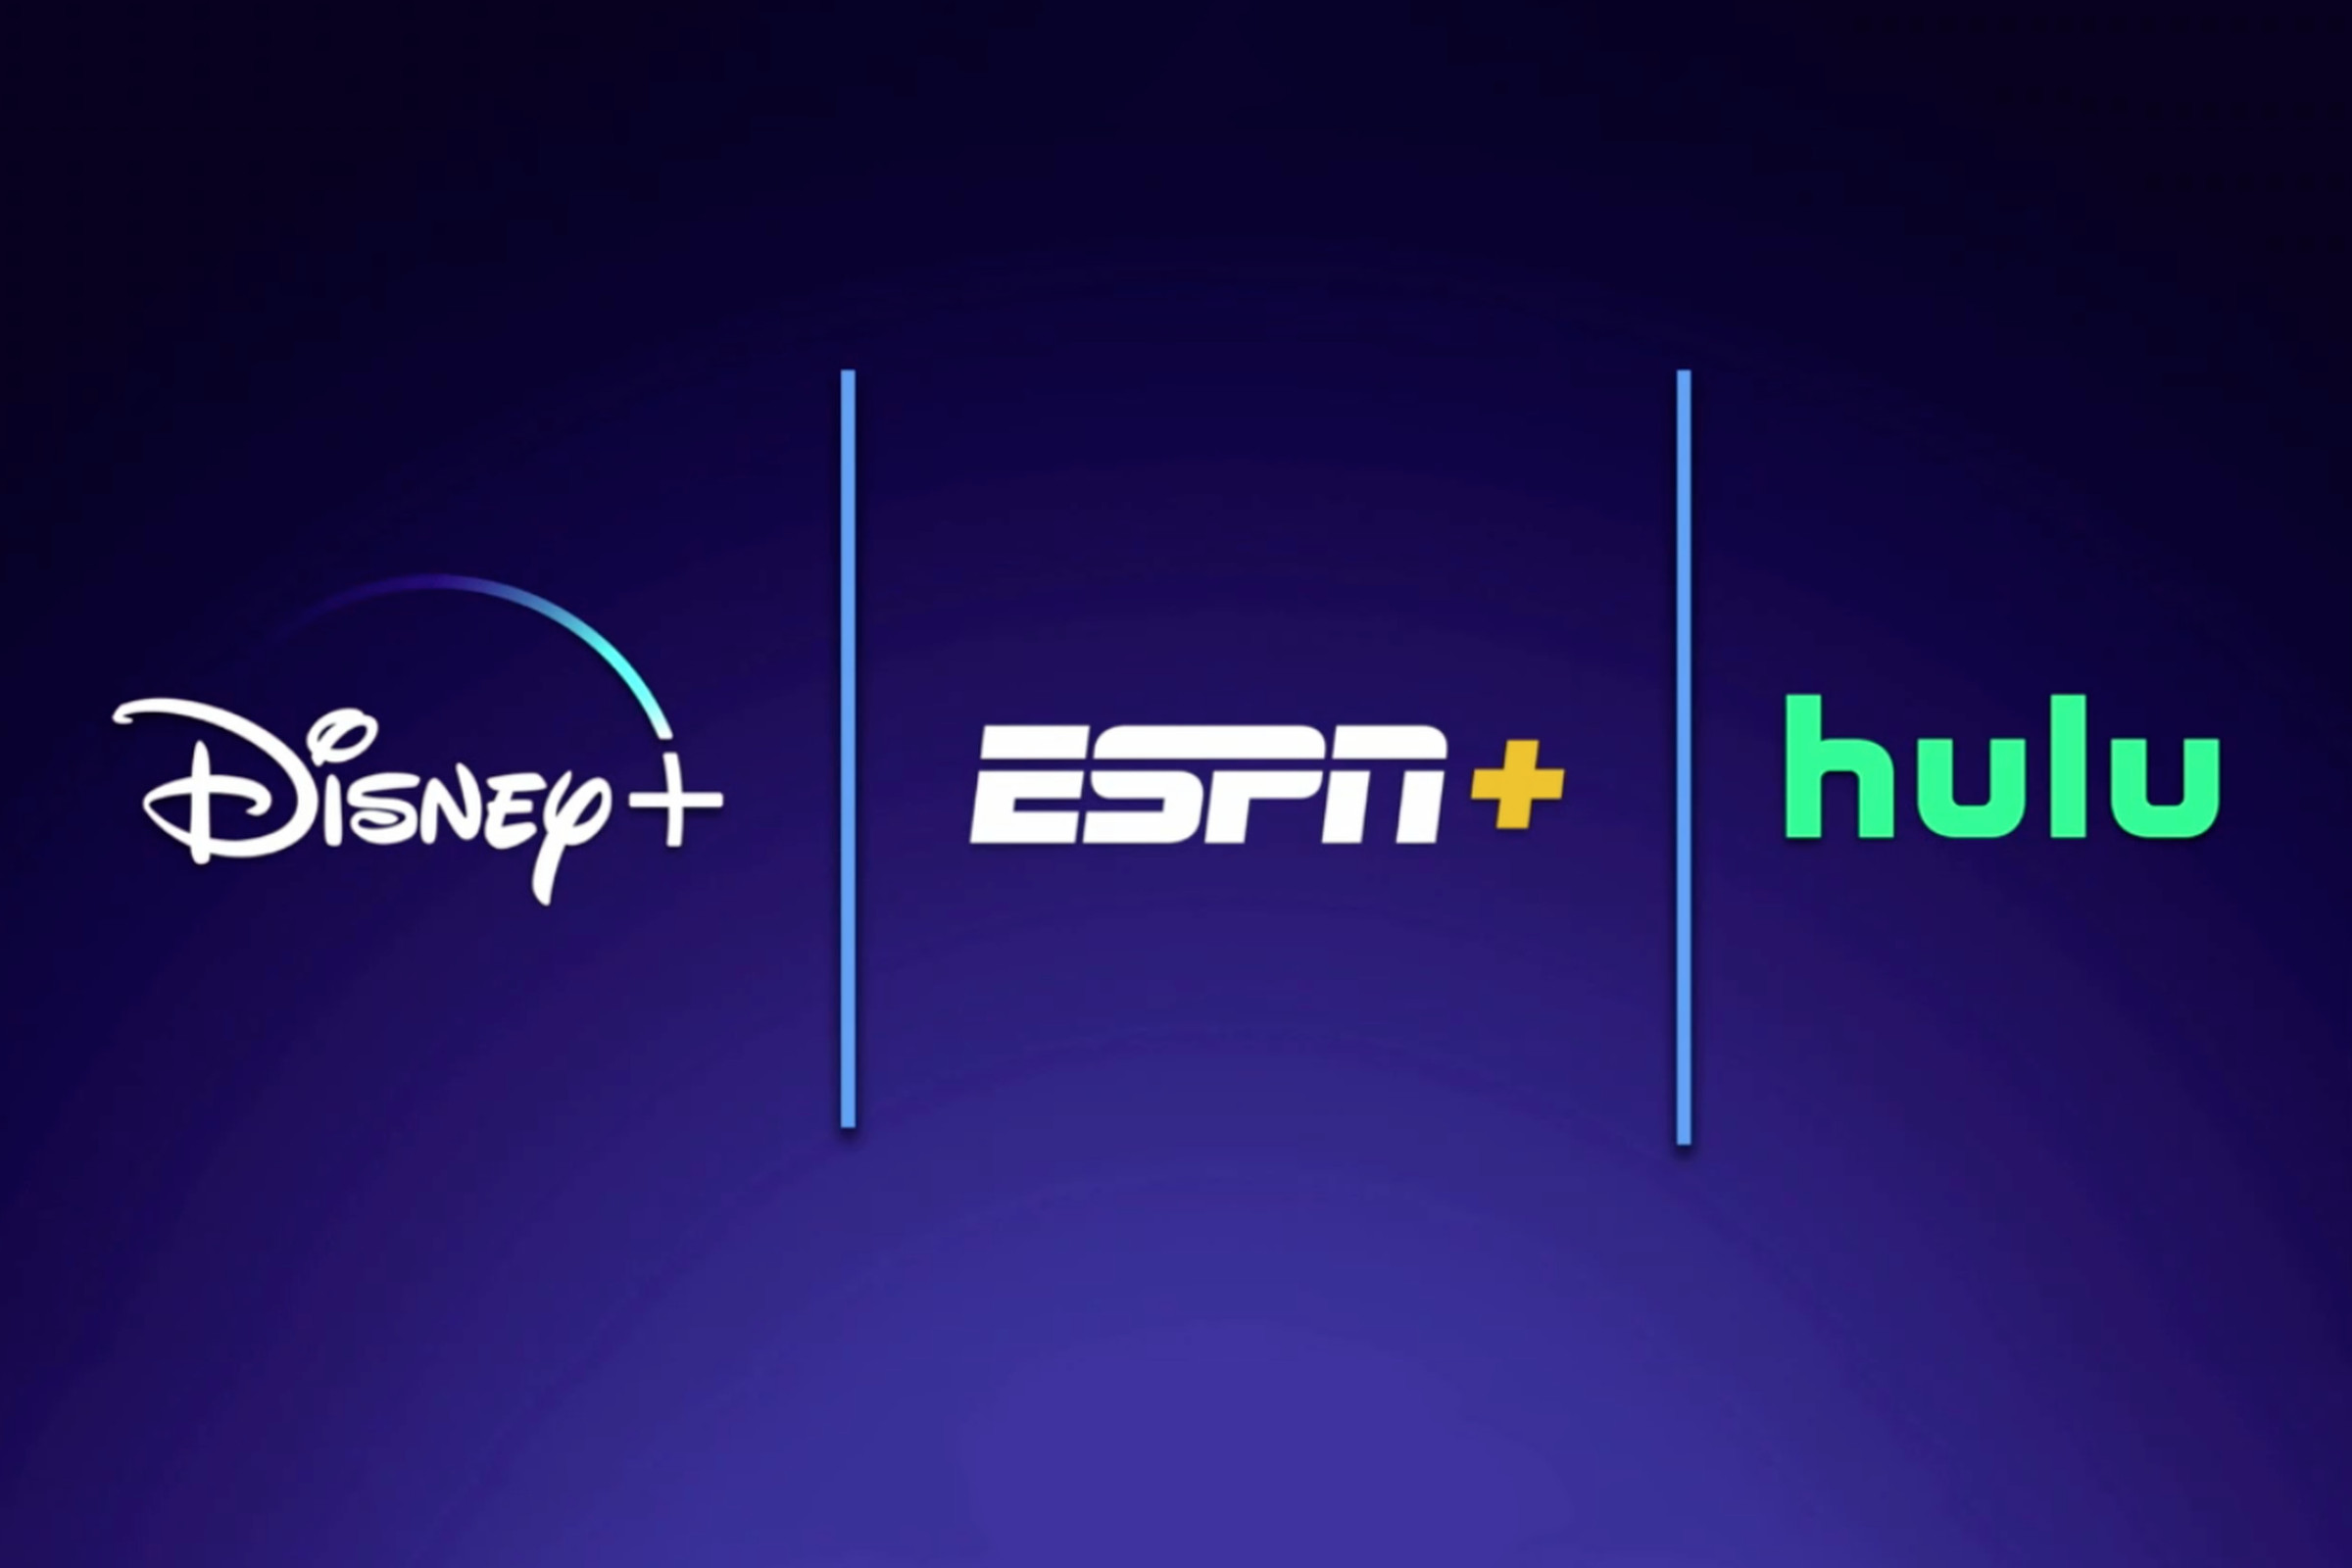 Disney Plus ESPN Plus Hulu bundle